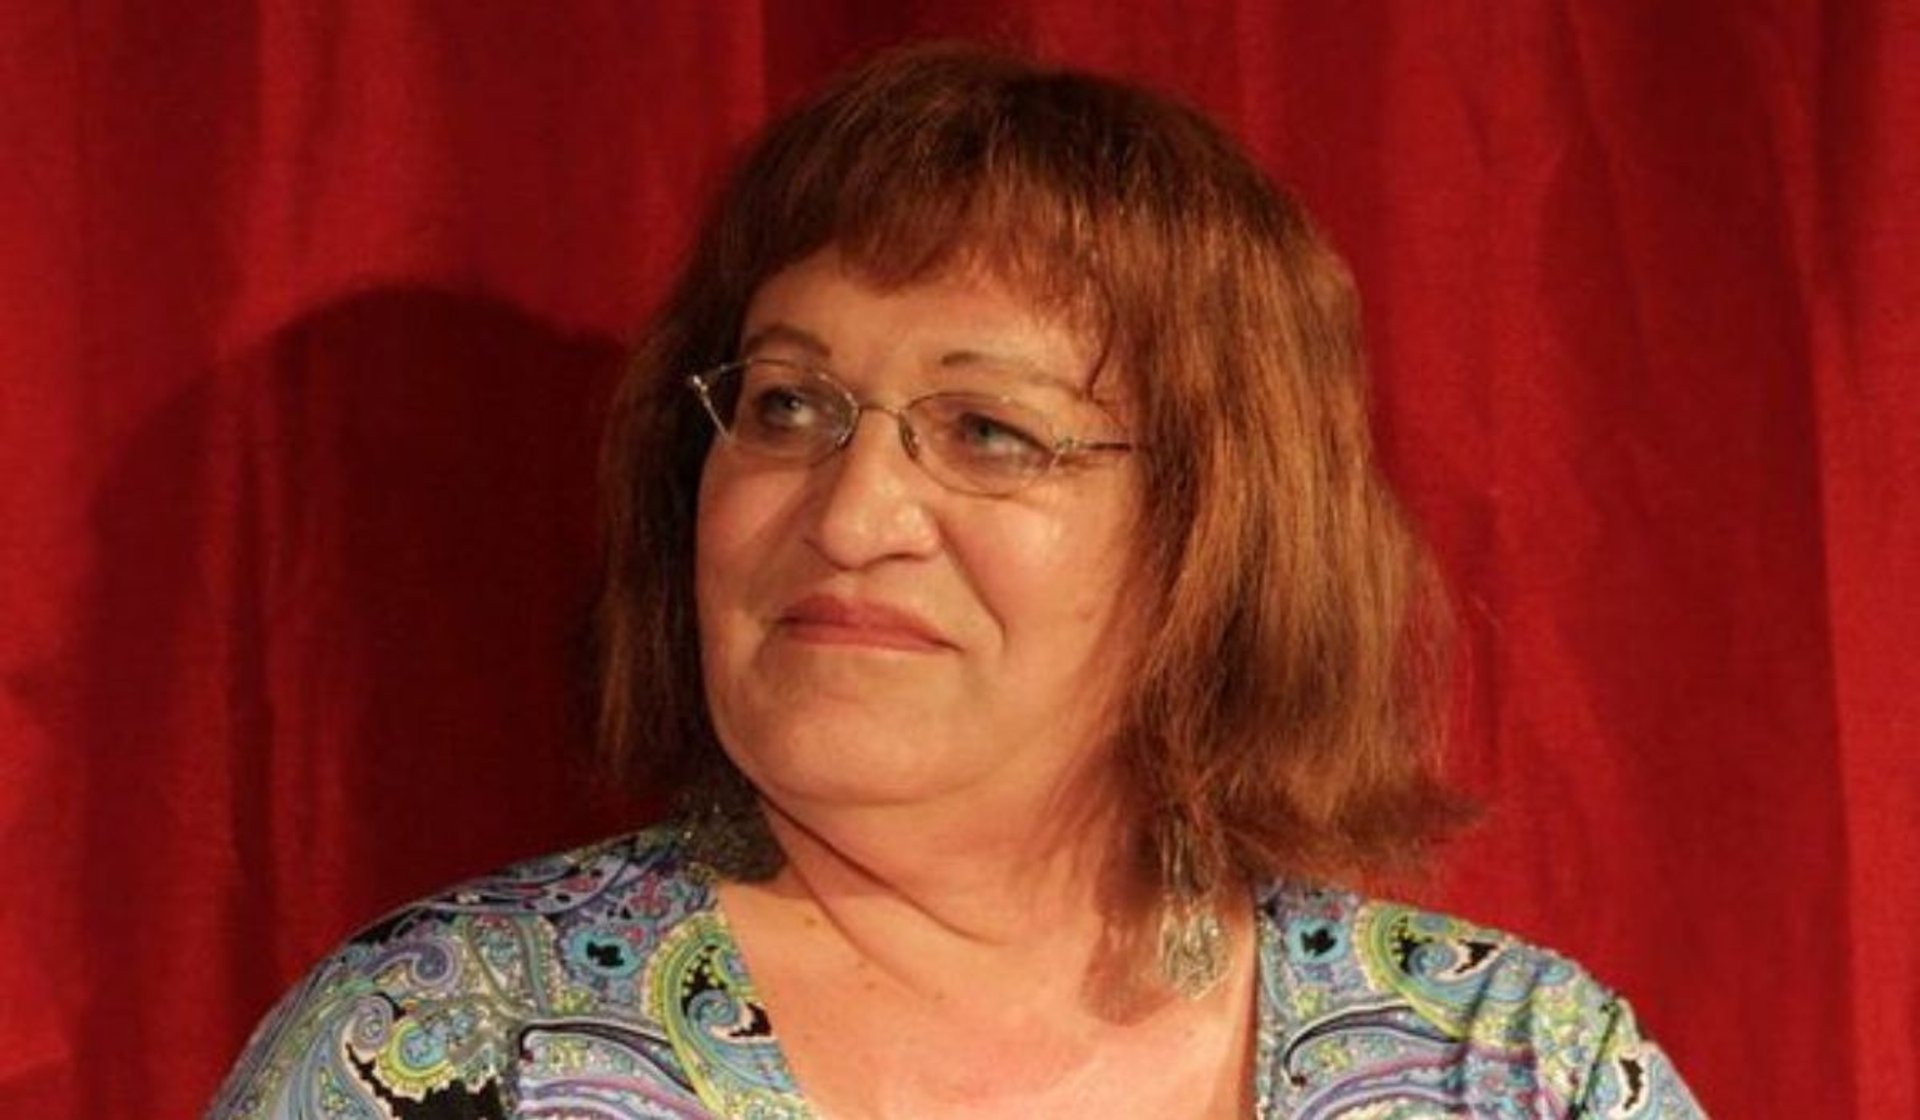 Anna Grodzka